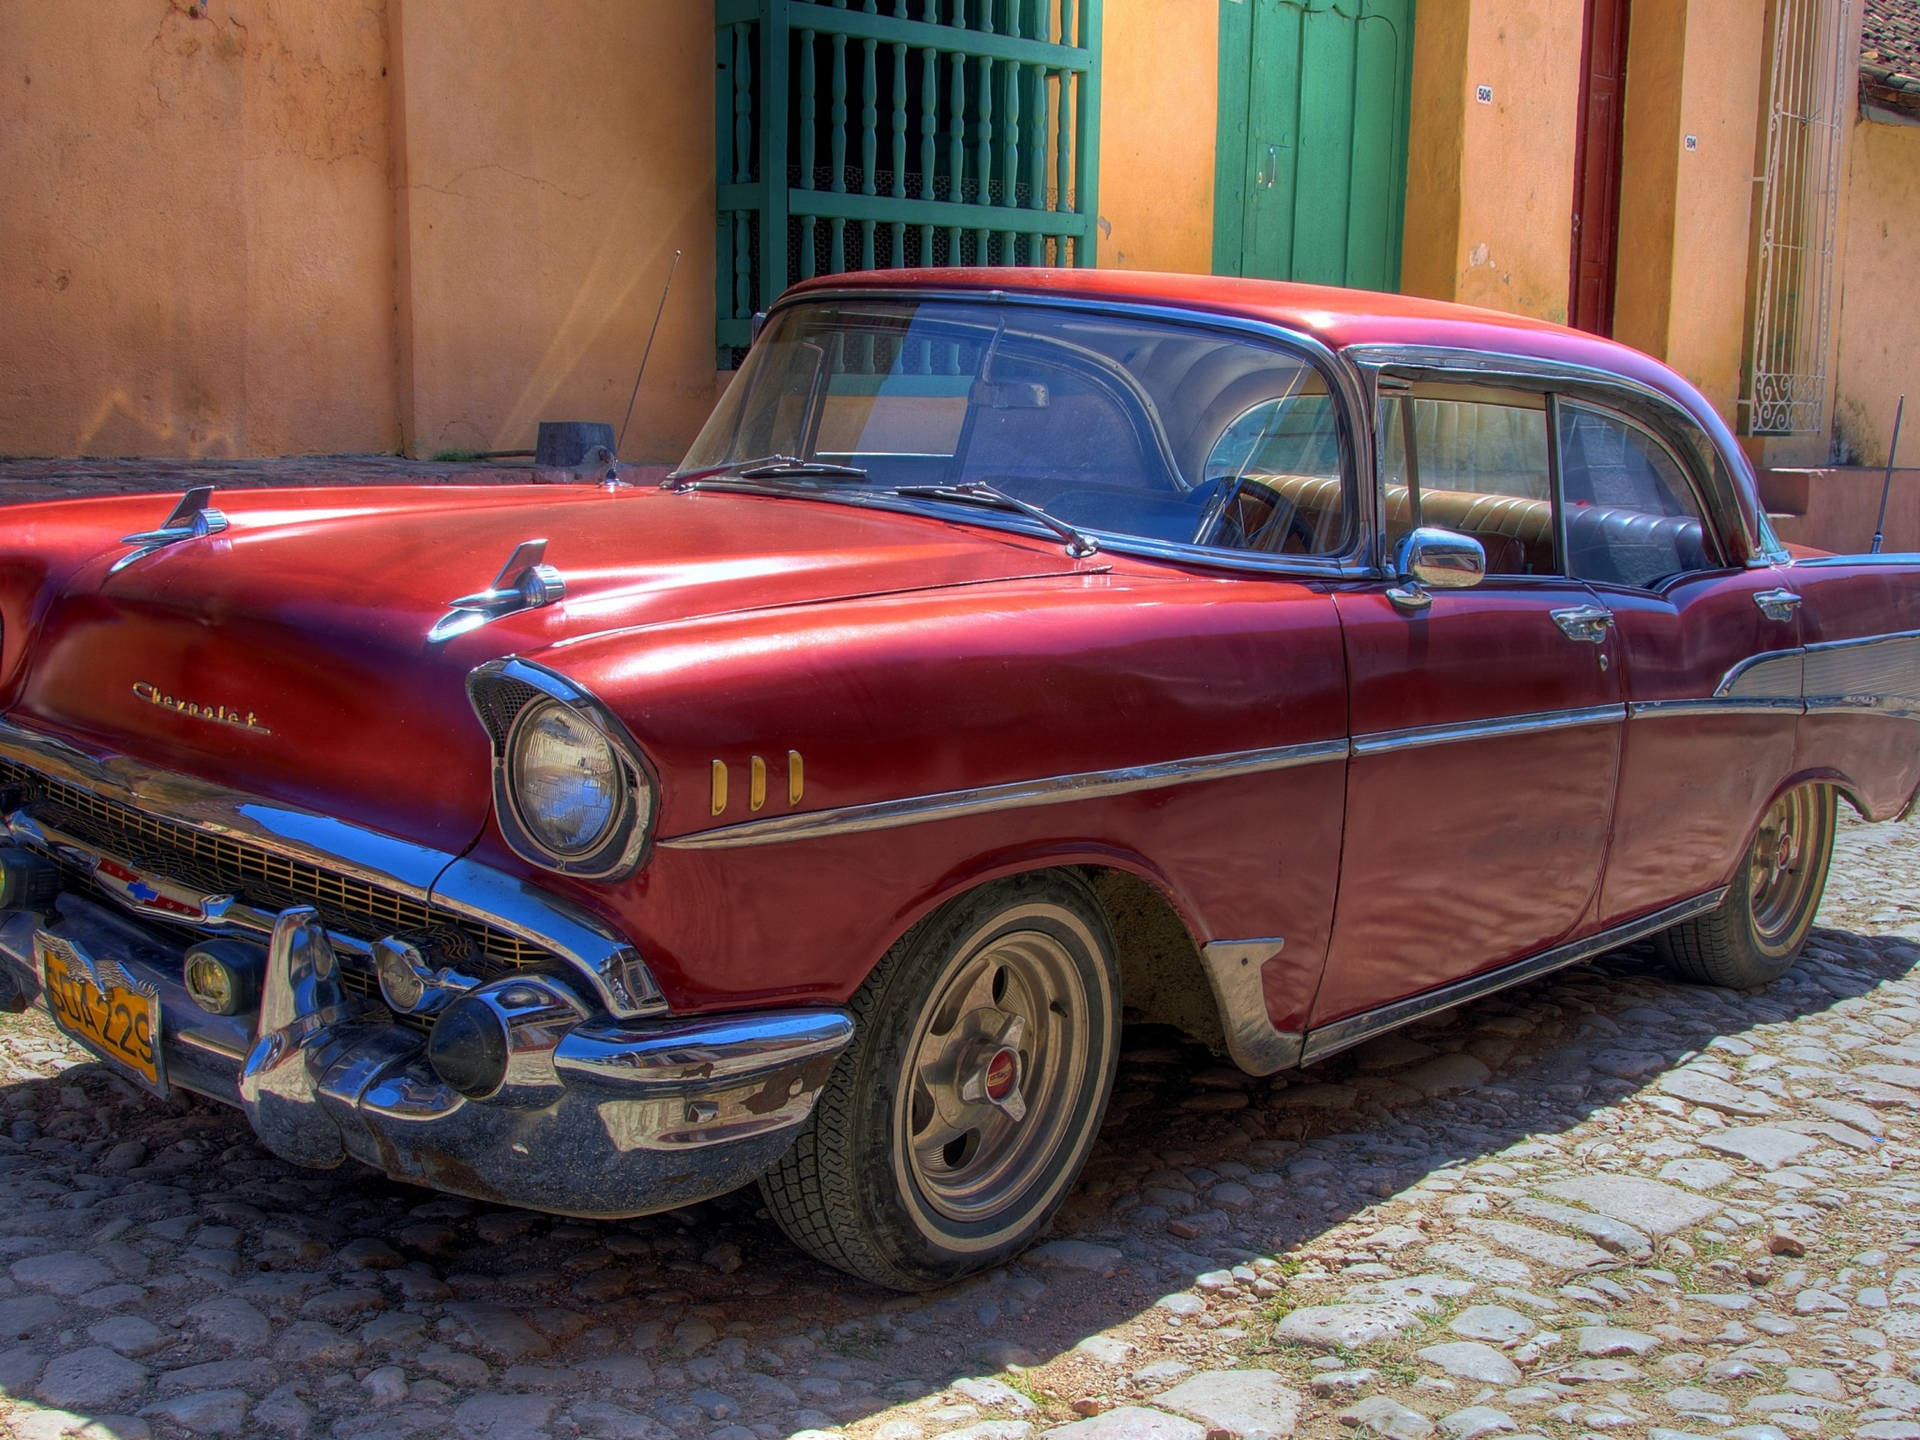 Havana Red Chevrolet Wallpaper